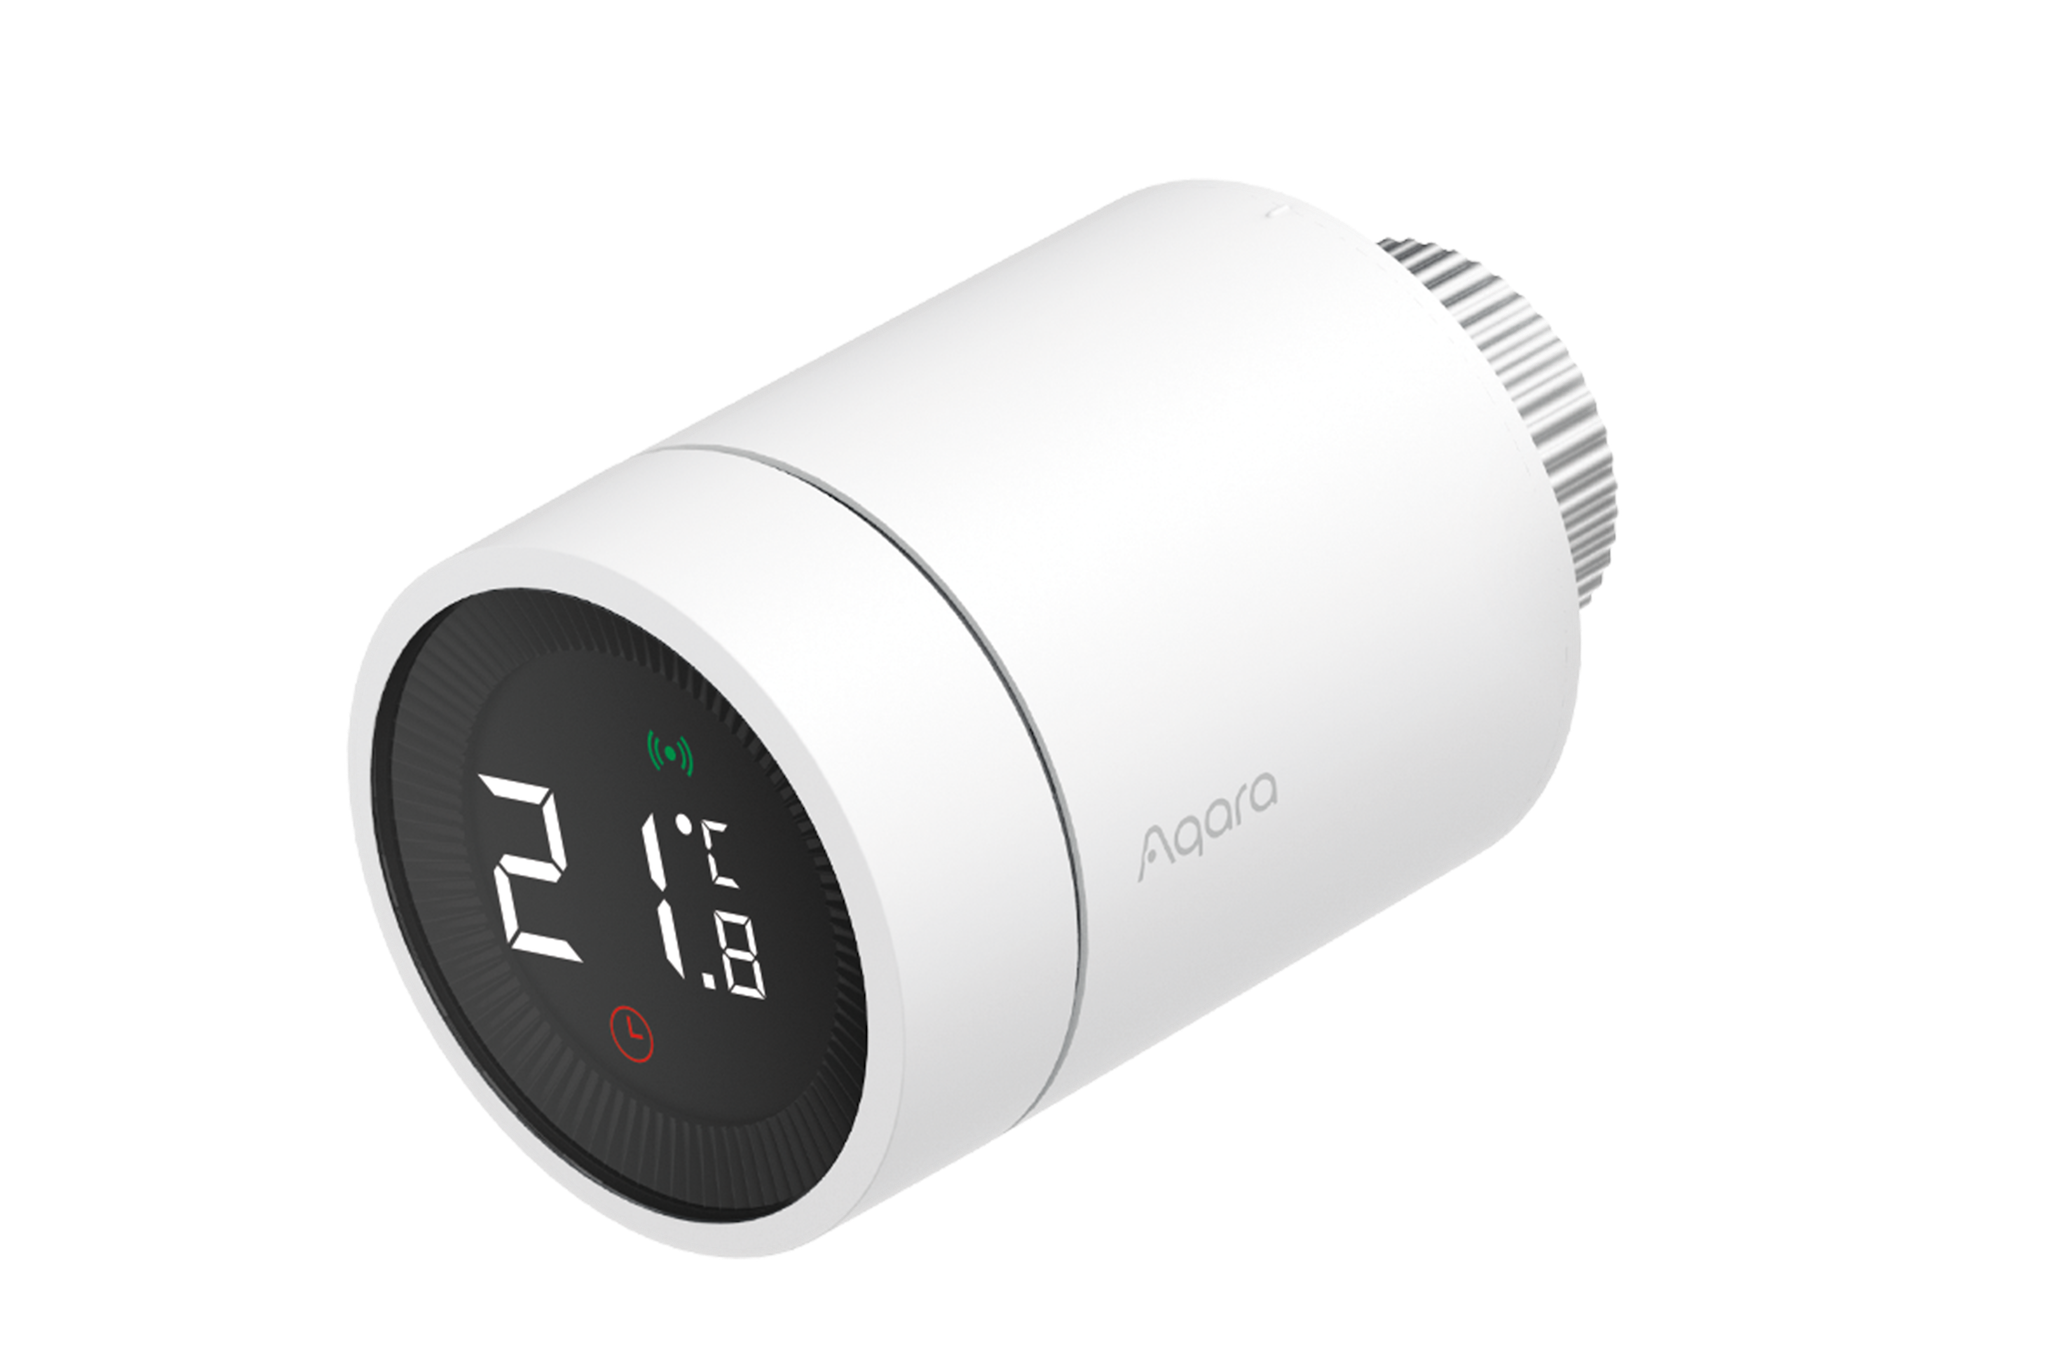 Thermostat radiateur domotique zigbee